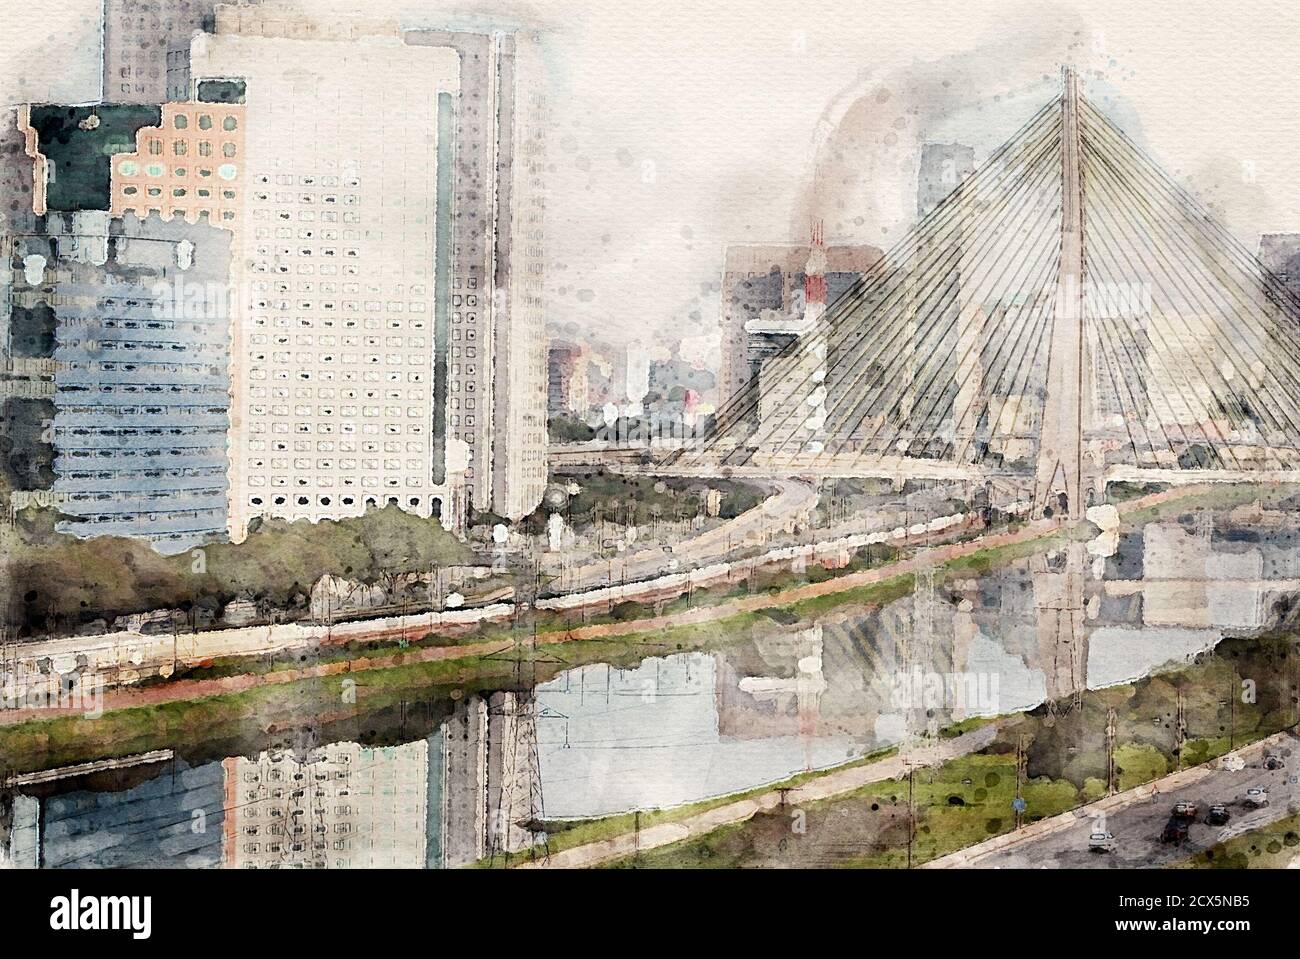 Estaiada Bridge in Sao Paulo, Brazil. Watercolor digital painting art illustration of famous place in the city. Stock Photo